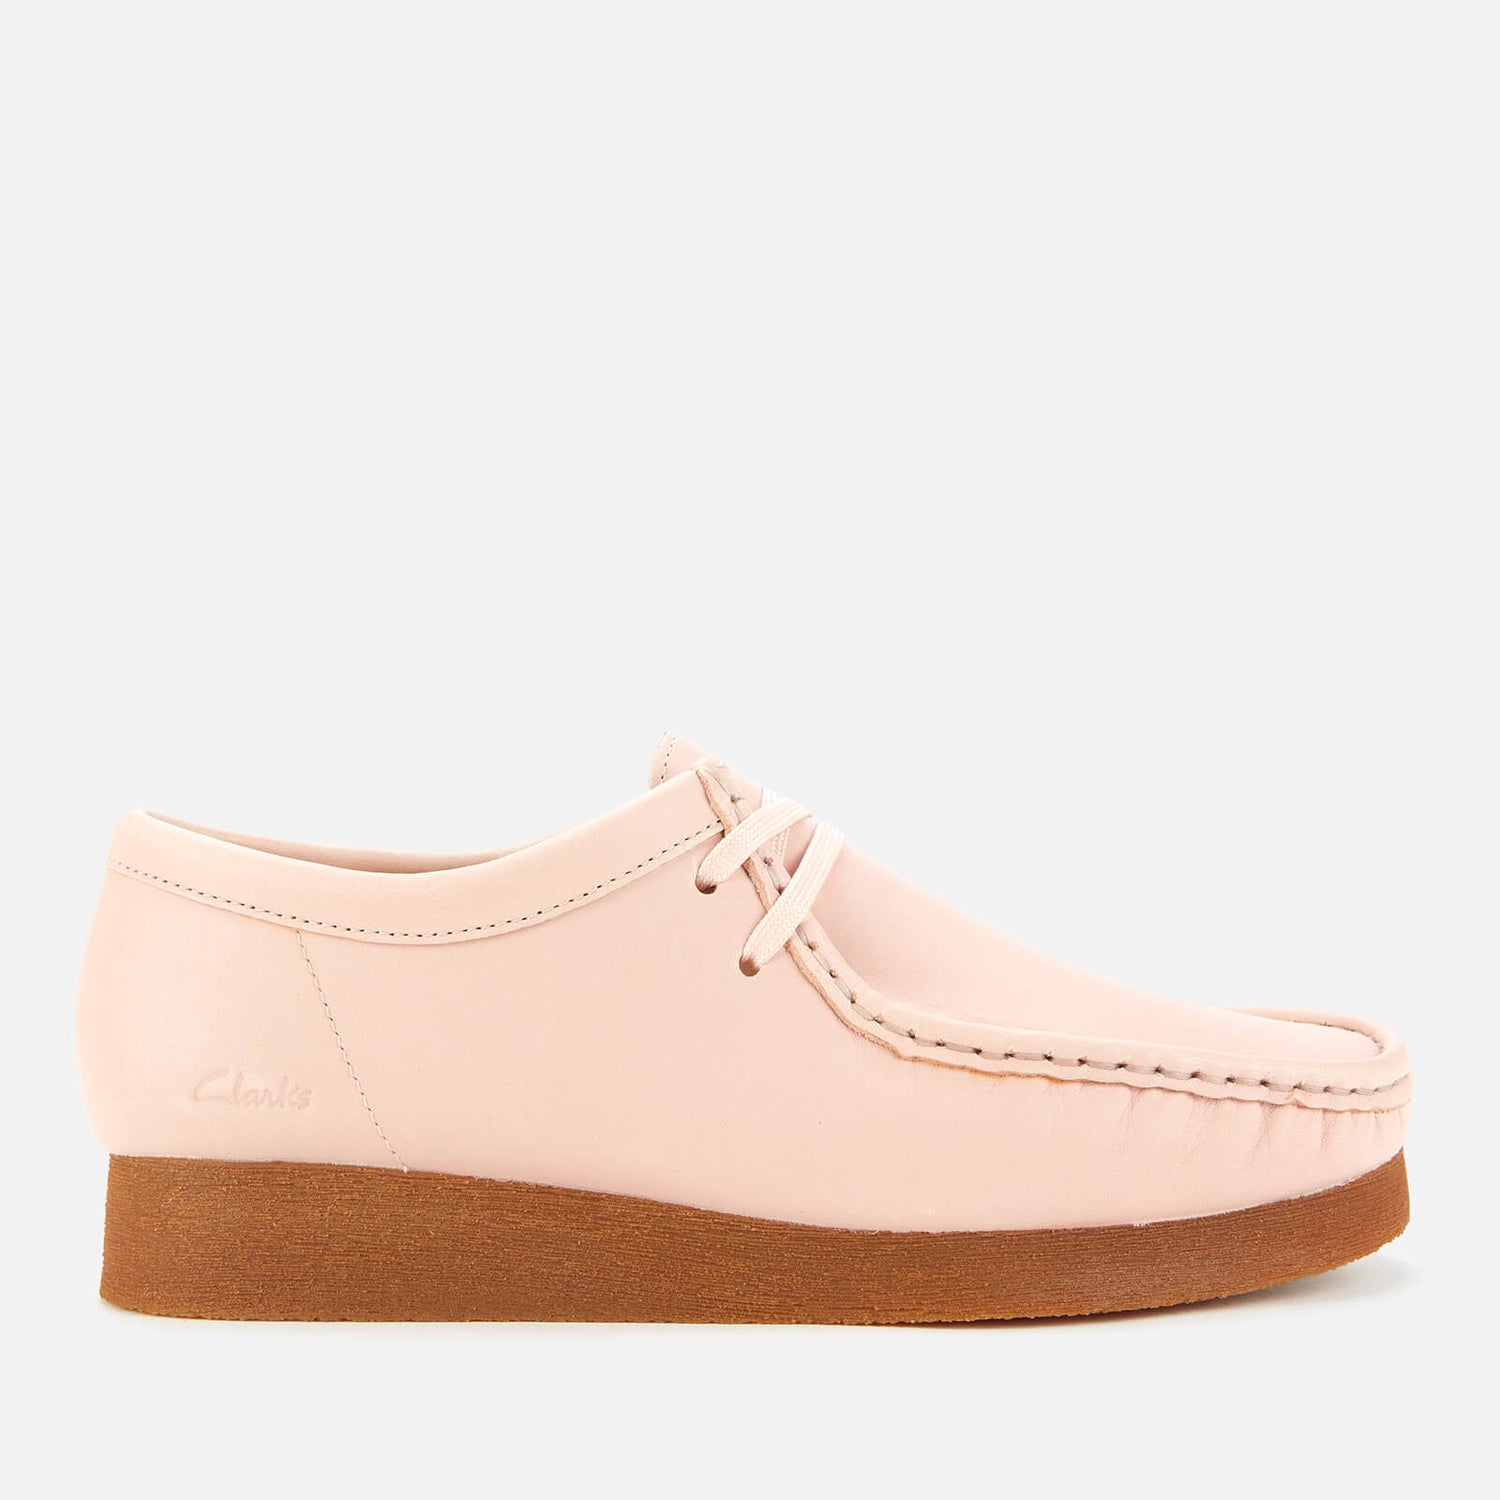 Clarks Women's Wallabee Suede Shoes - Light Pink